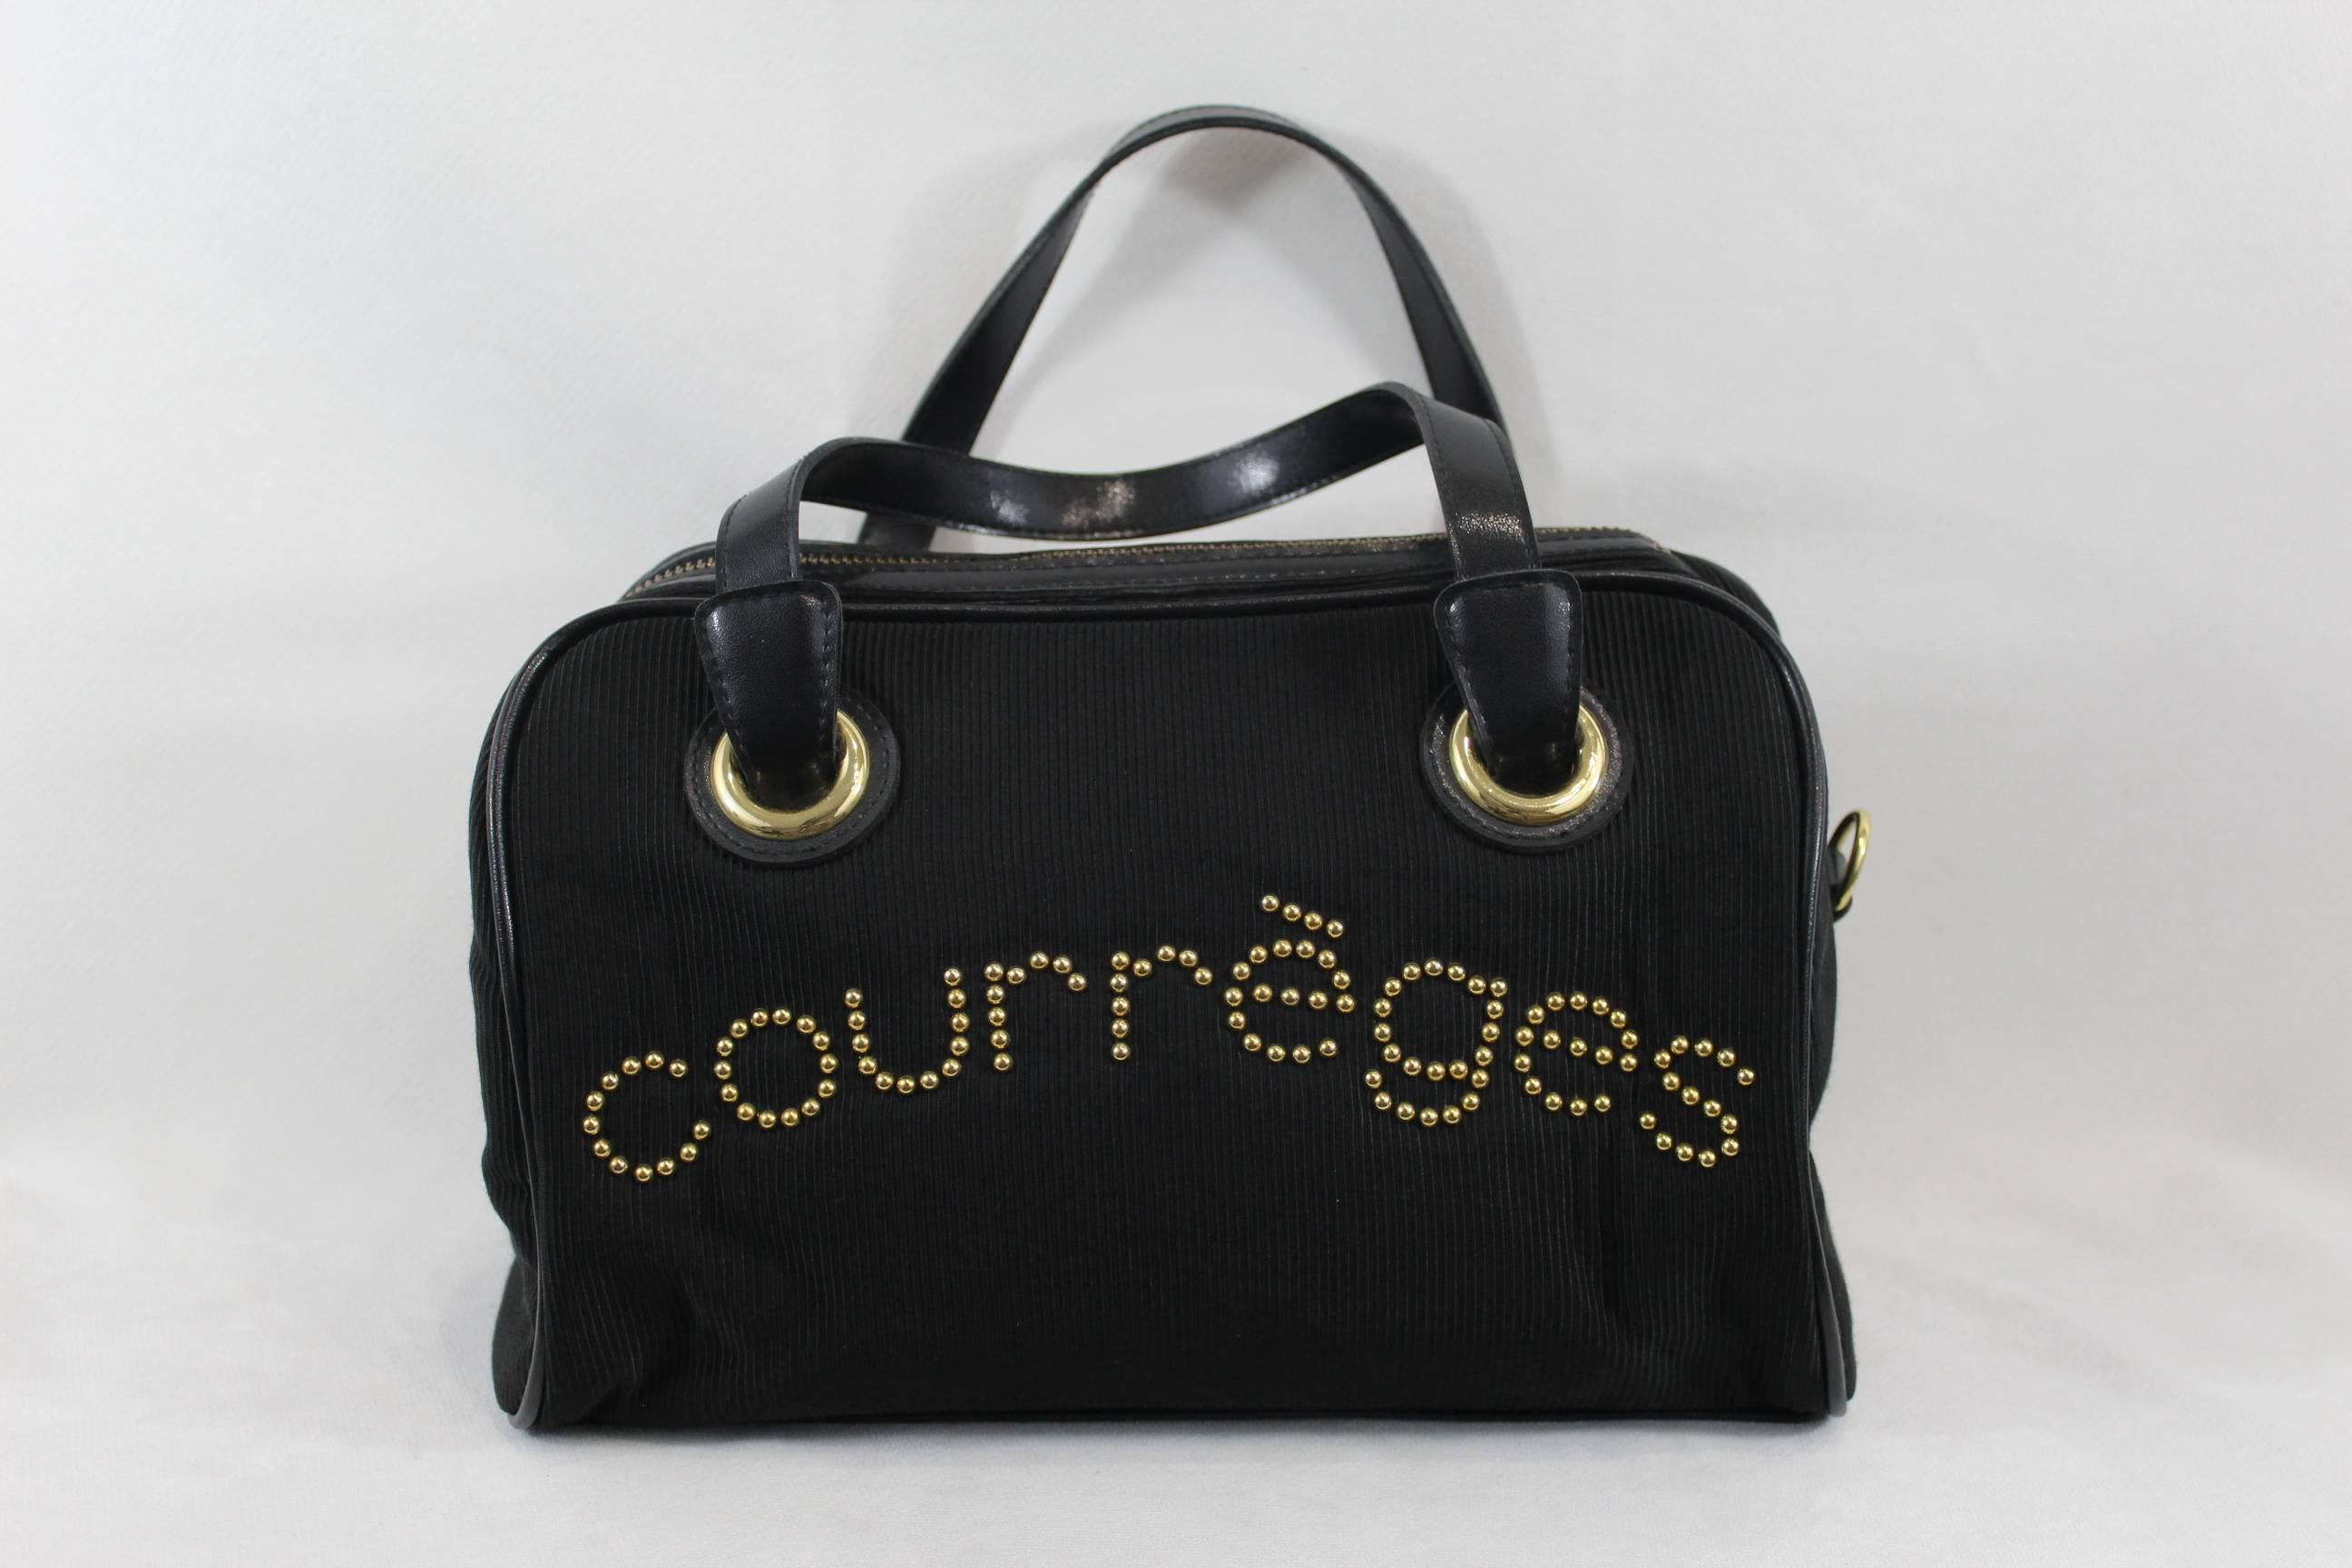 courreges bag price